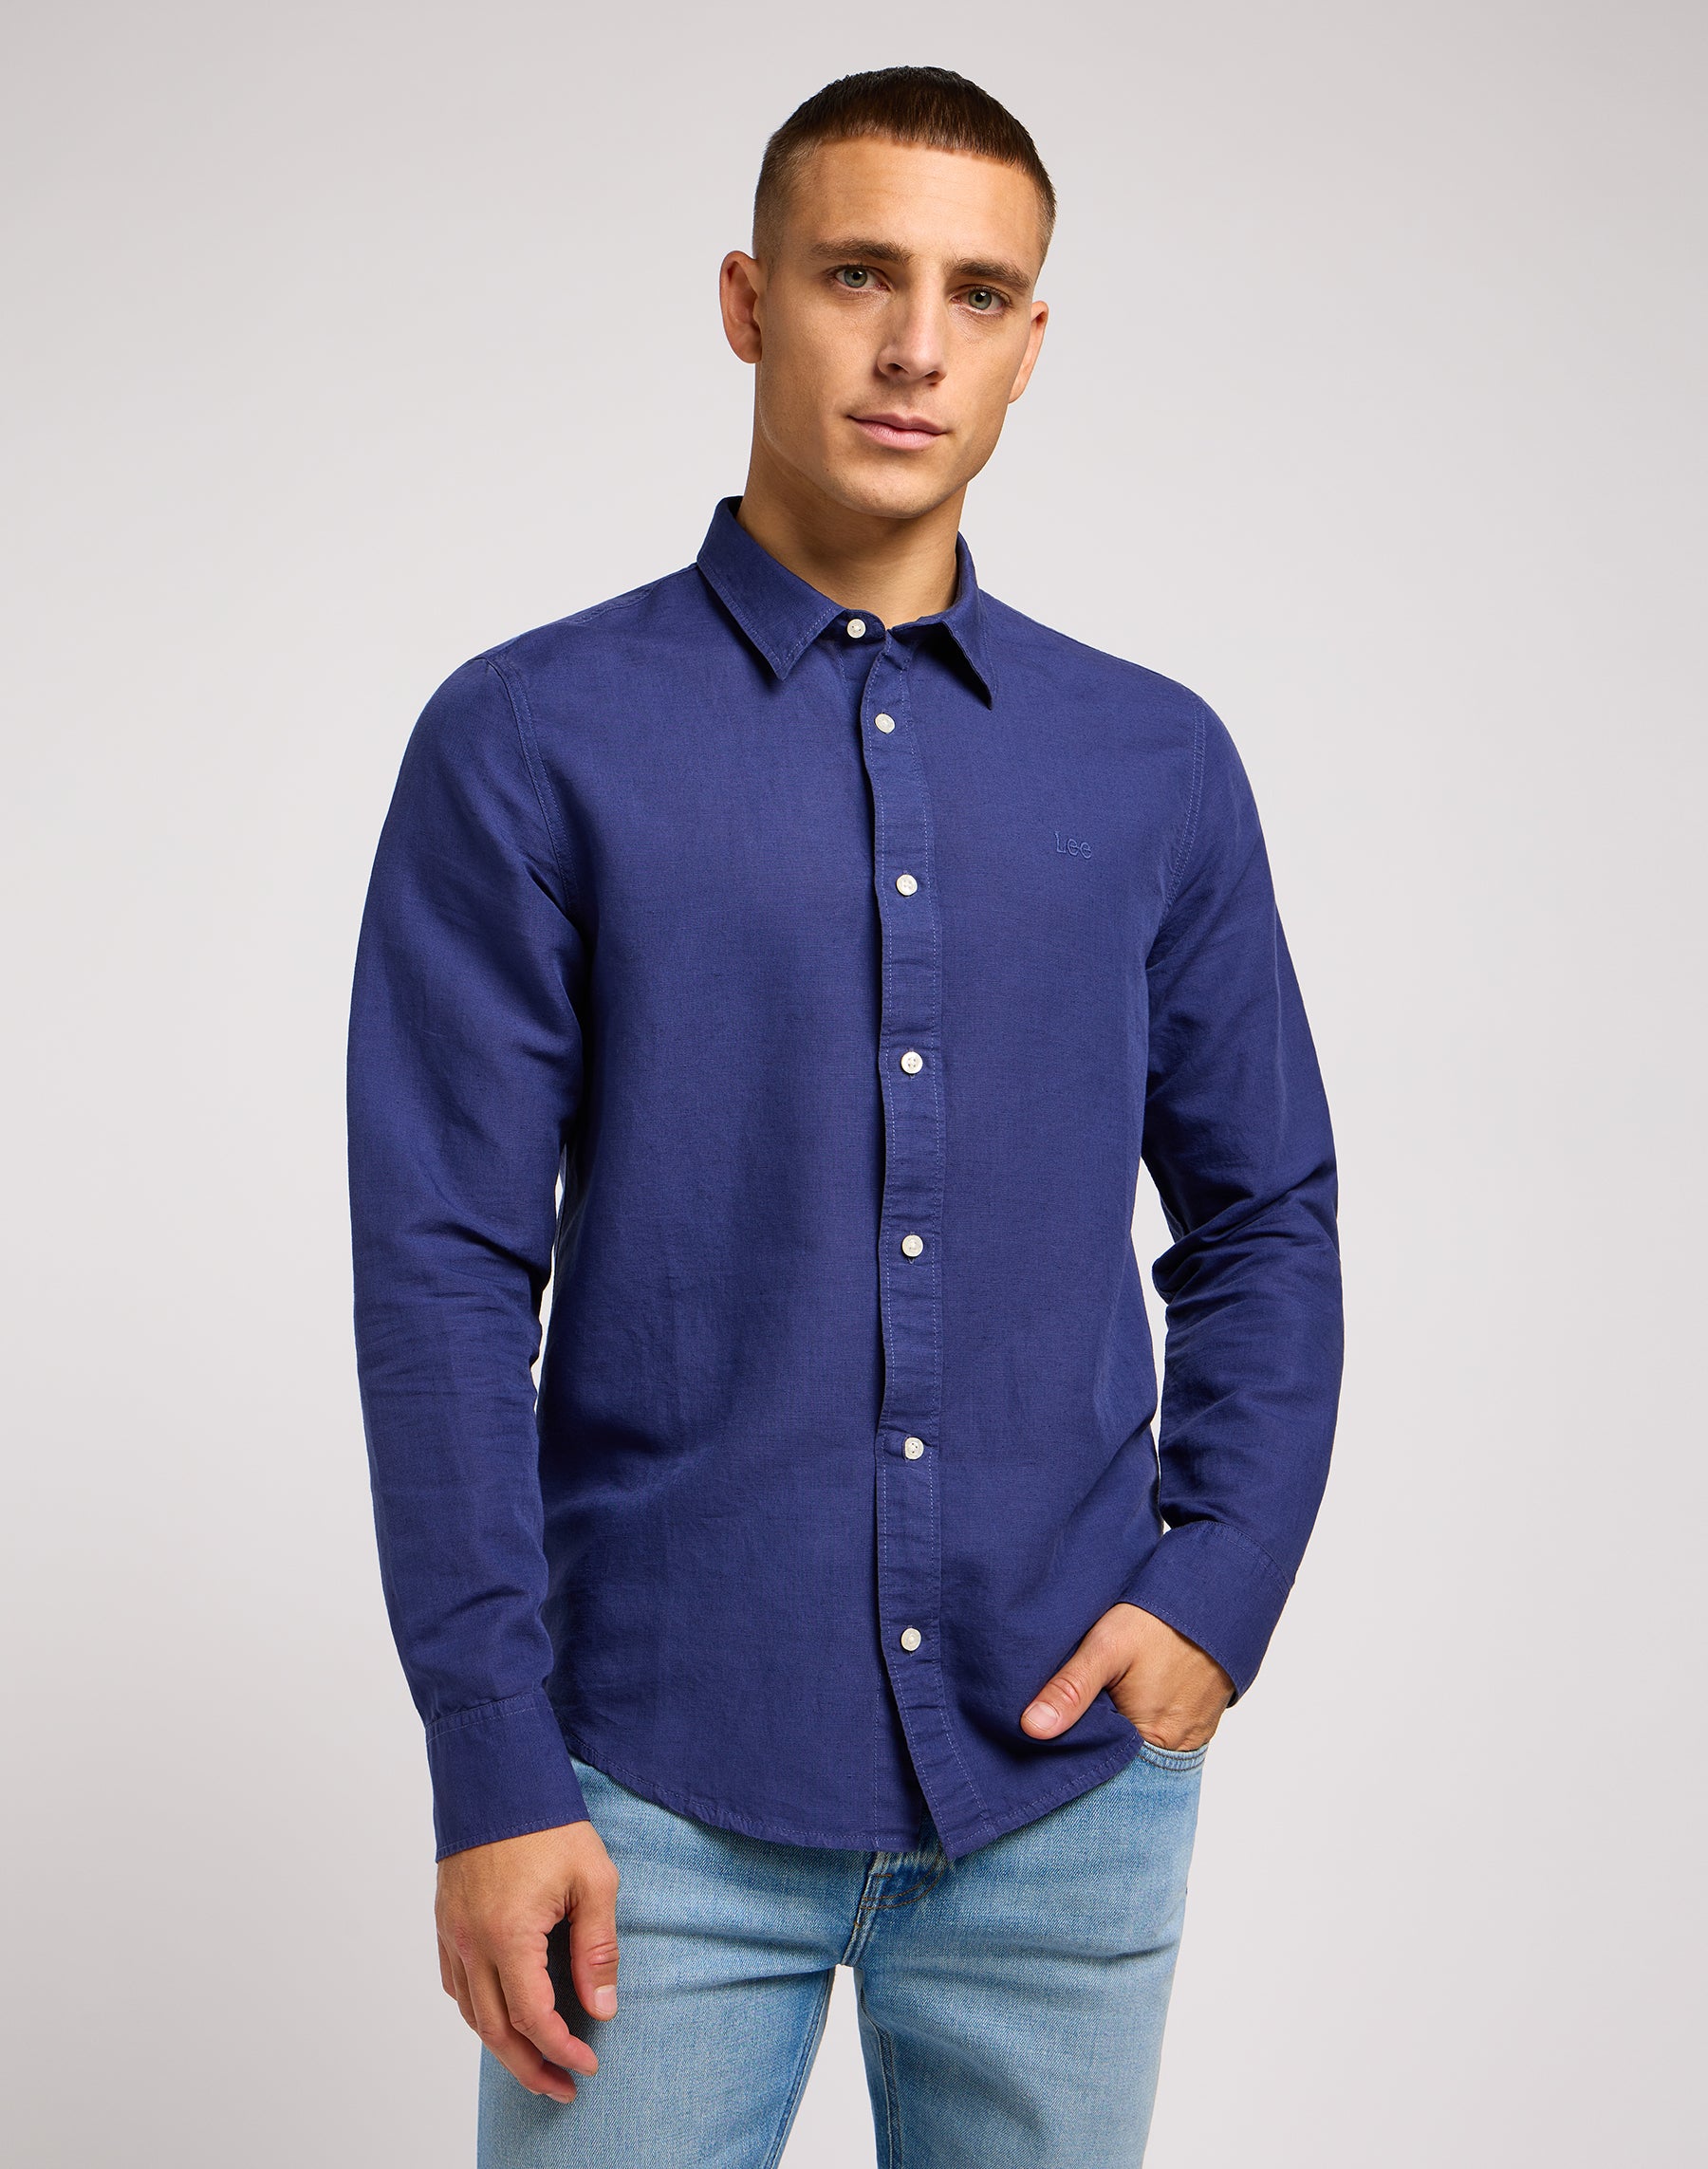 Patch Shirt in Medieval Blue Hemden Lee   